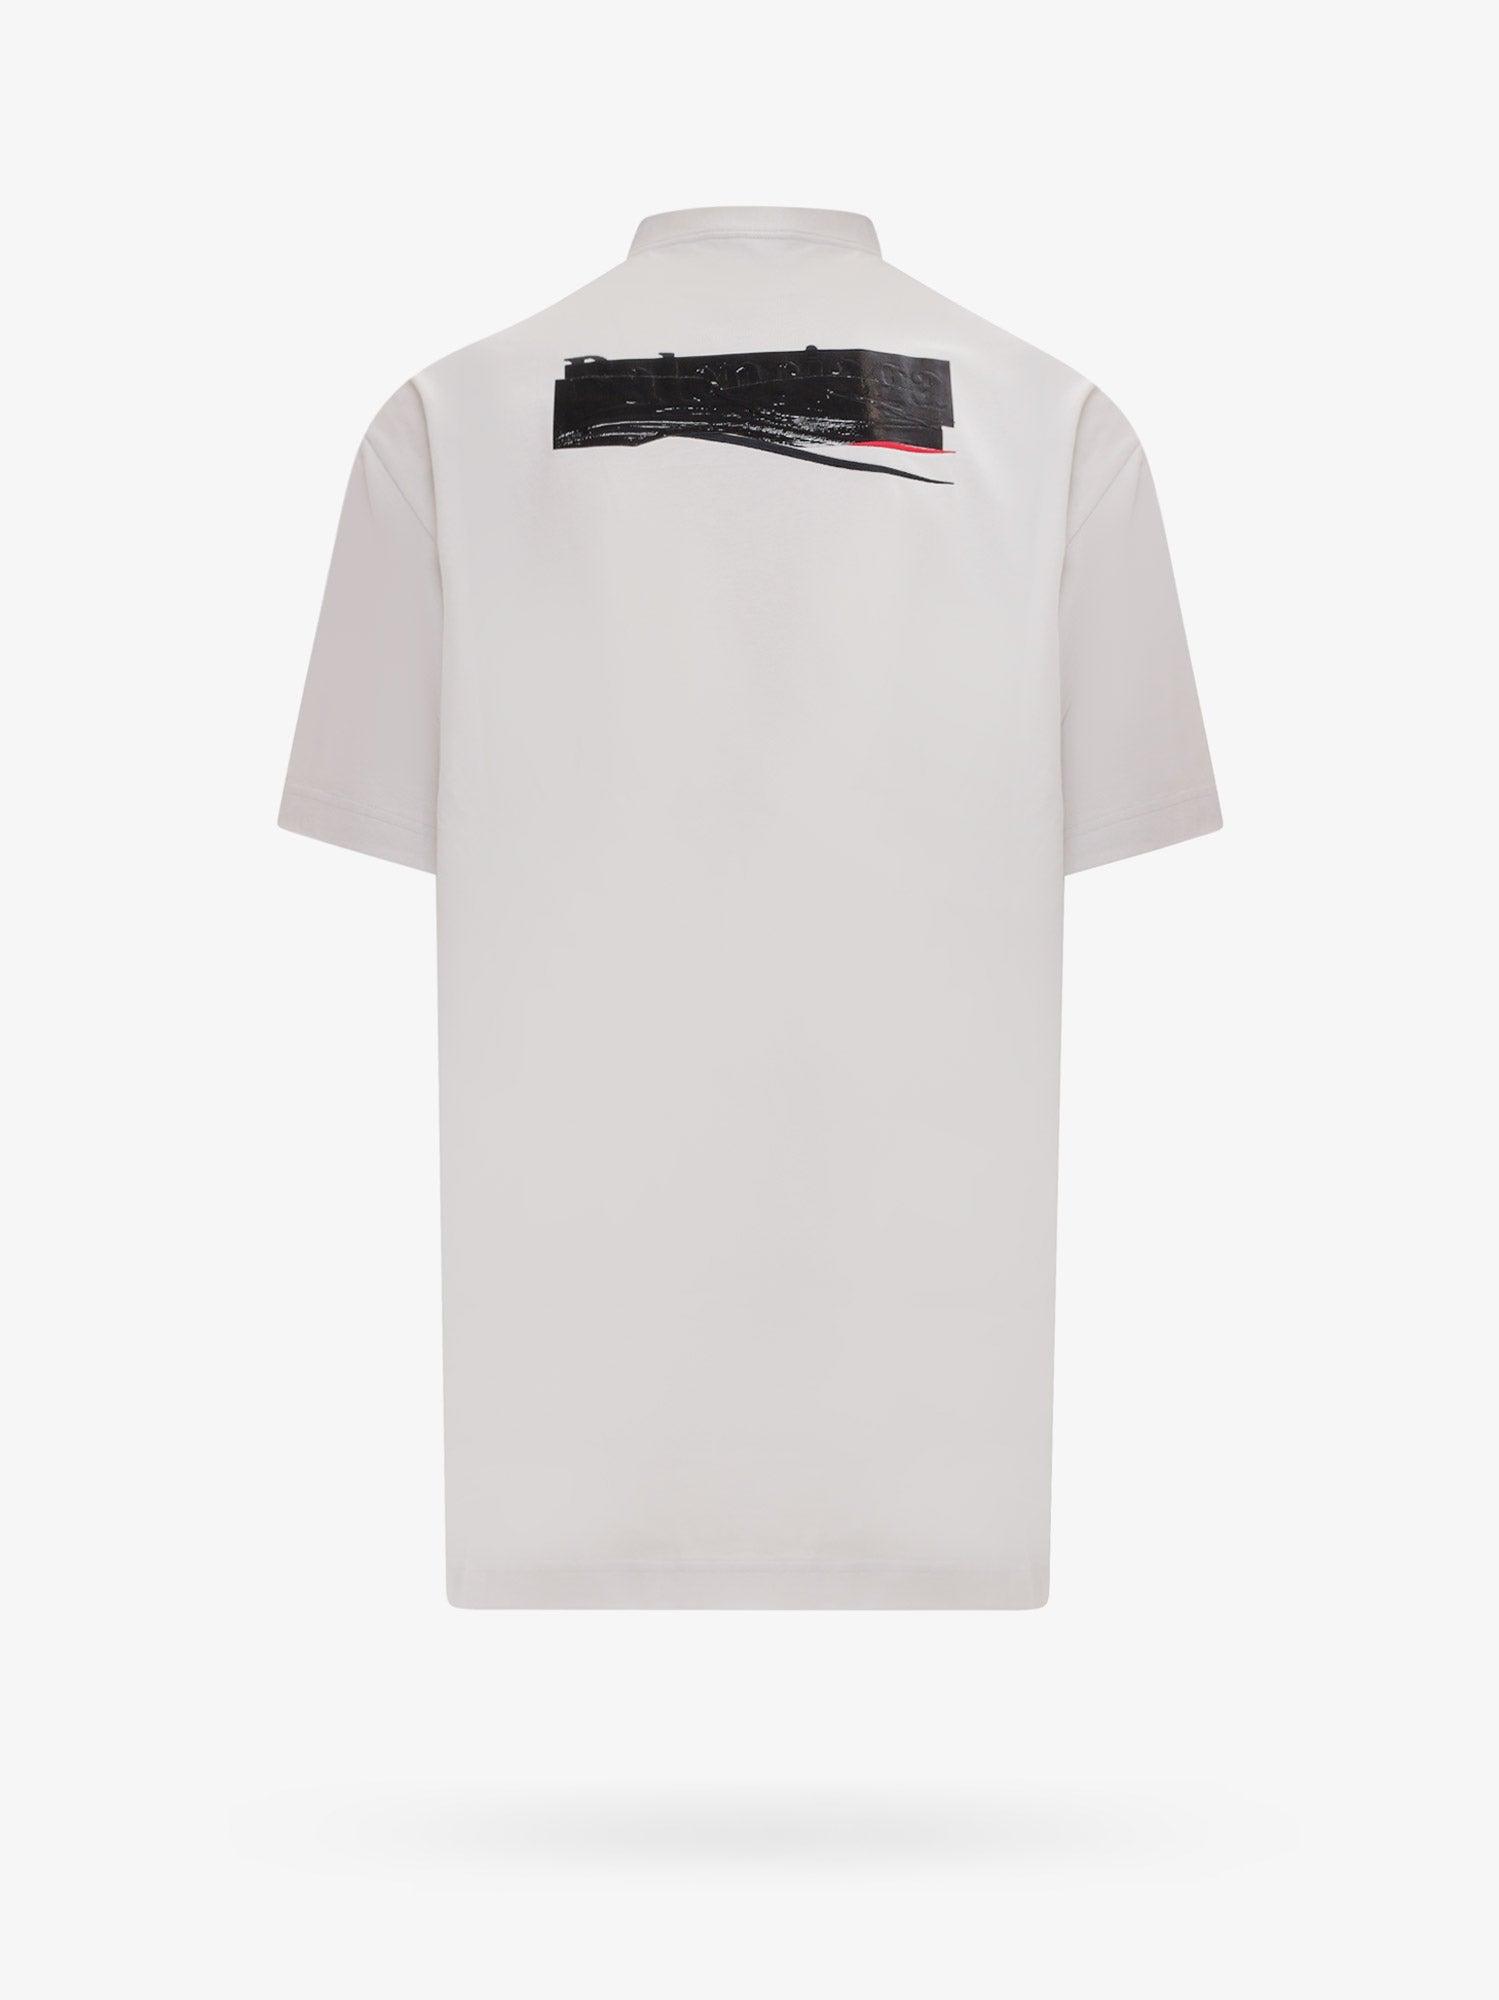 Balenciaga T-shirt in White for Men | Lyst